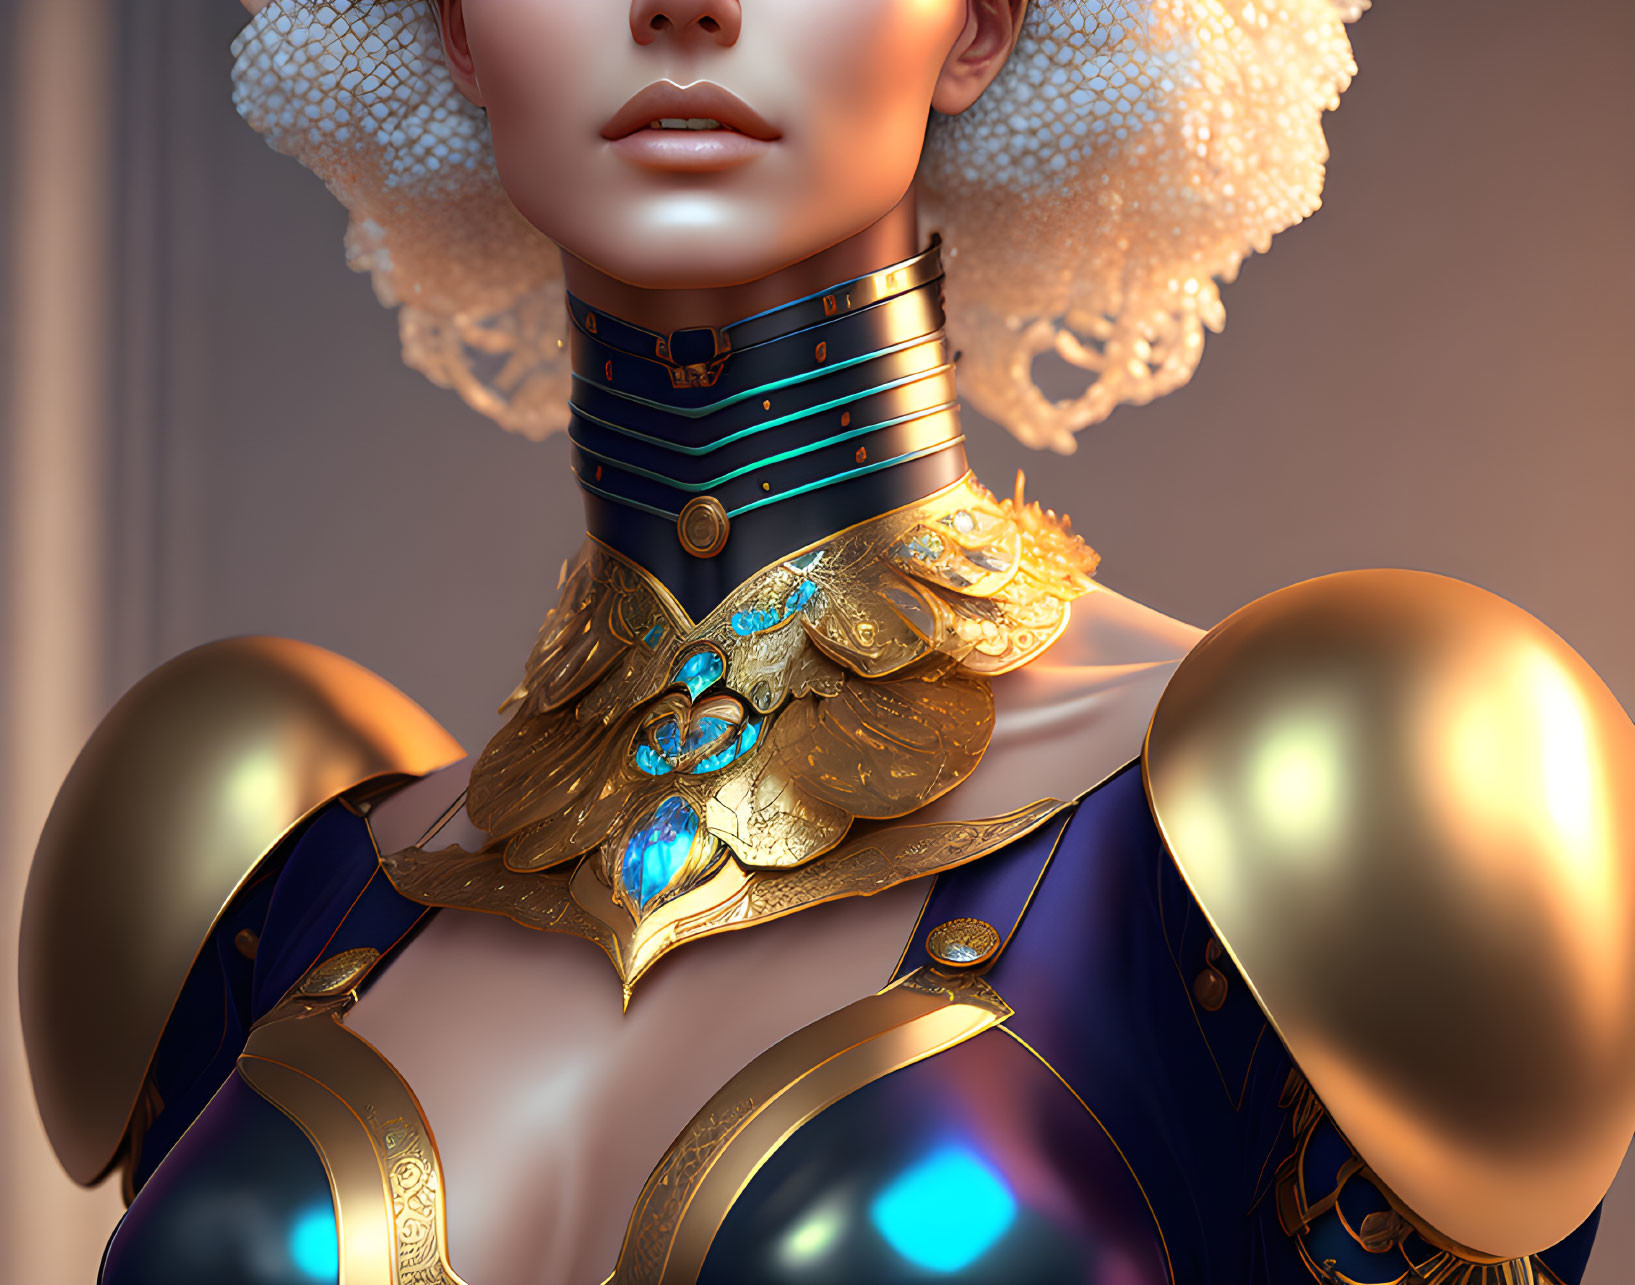 Detailed 3D illustration of female figure in golden armor with blue gemstones